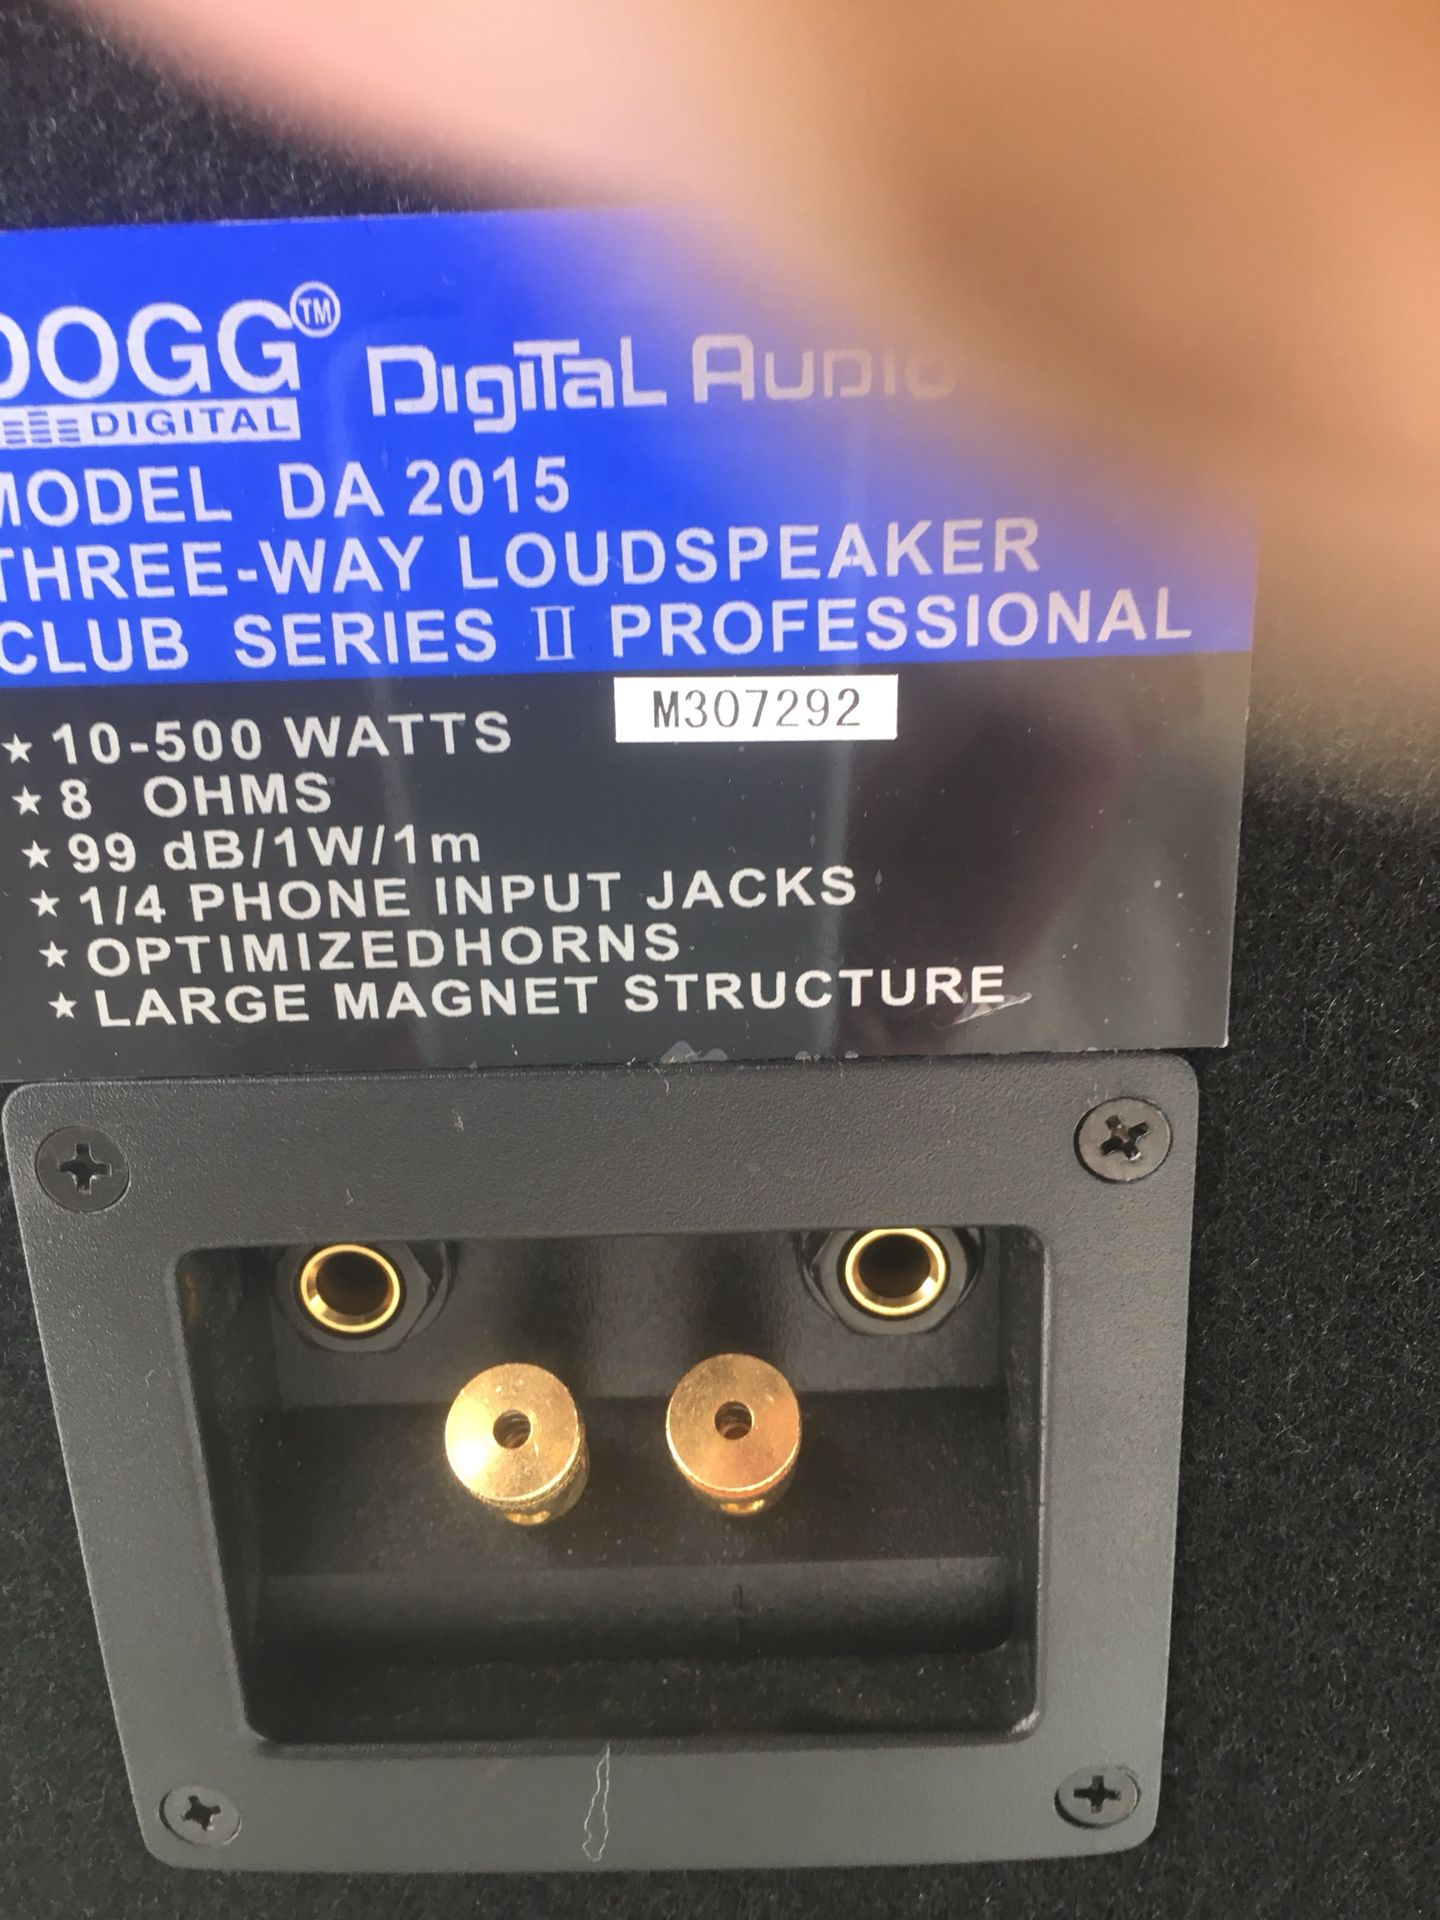 DOGG DIGITAL AUDIO 3way speaker club series’s was